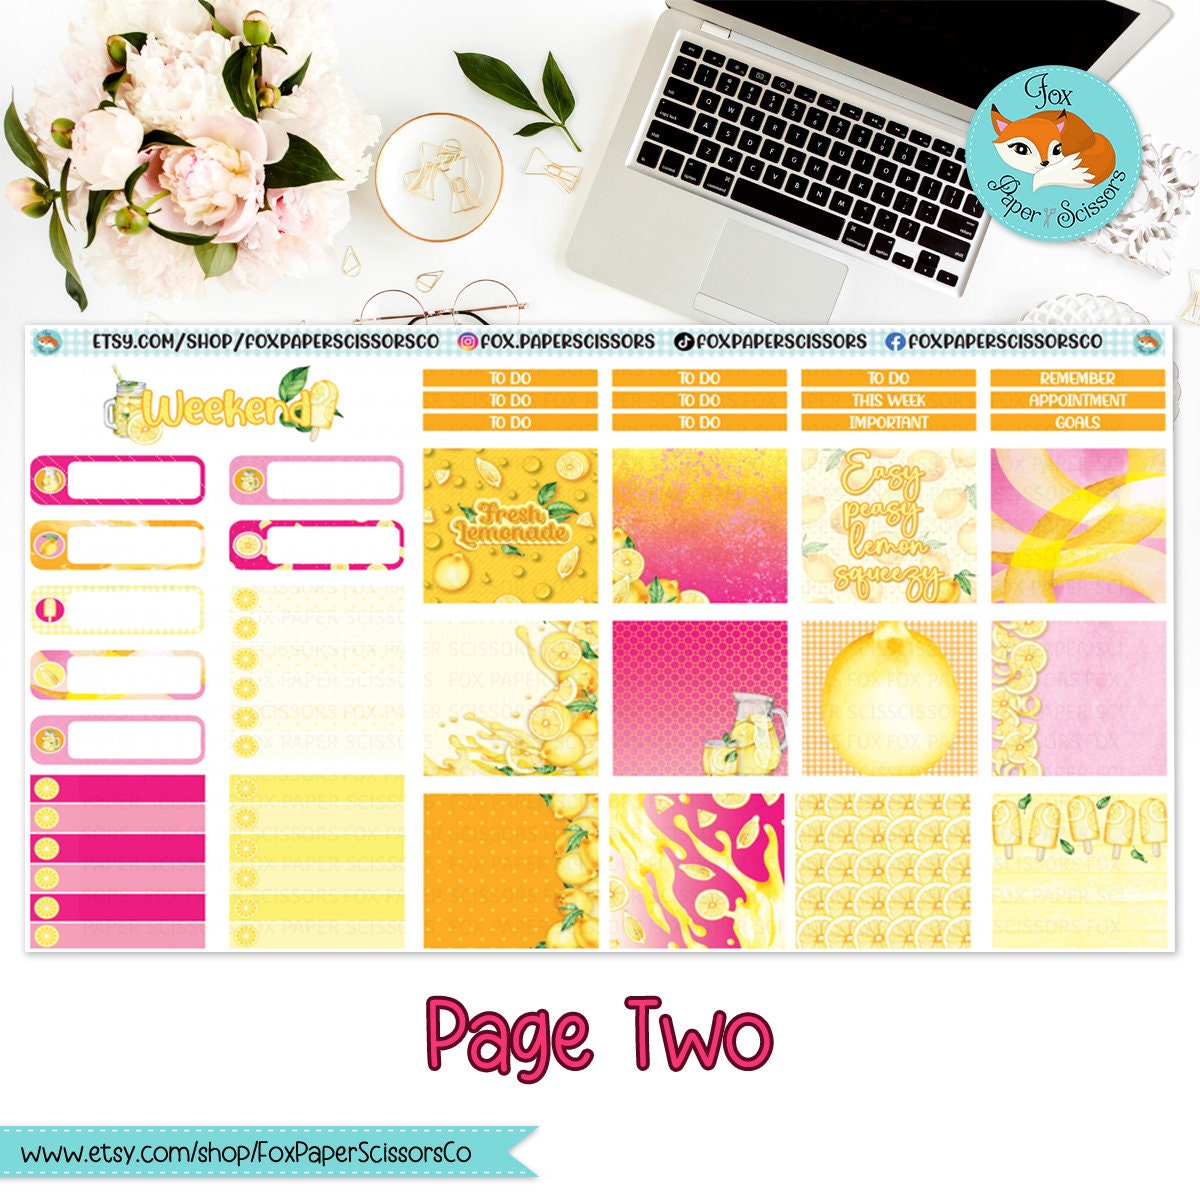 Lemonade | Hobonichi Cousin Weekly Planner Sticker Kit